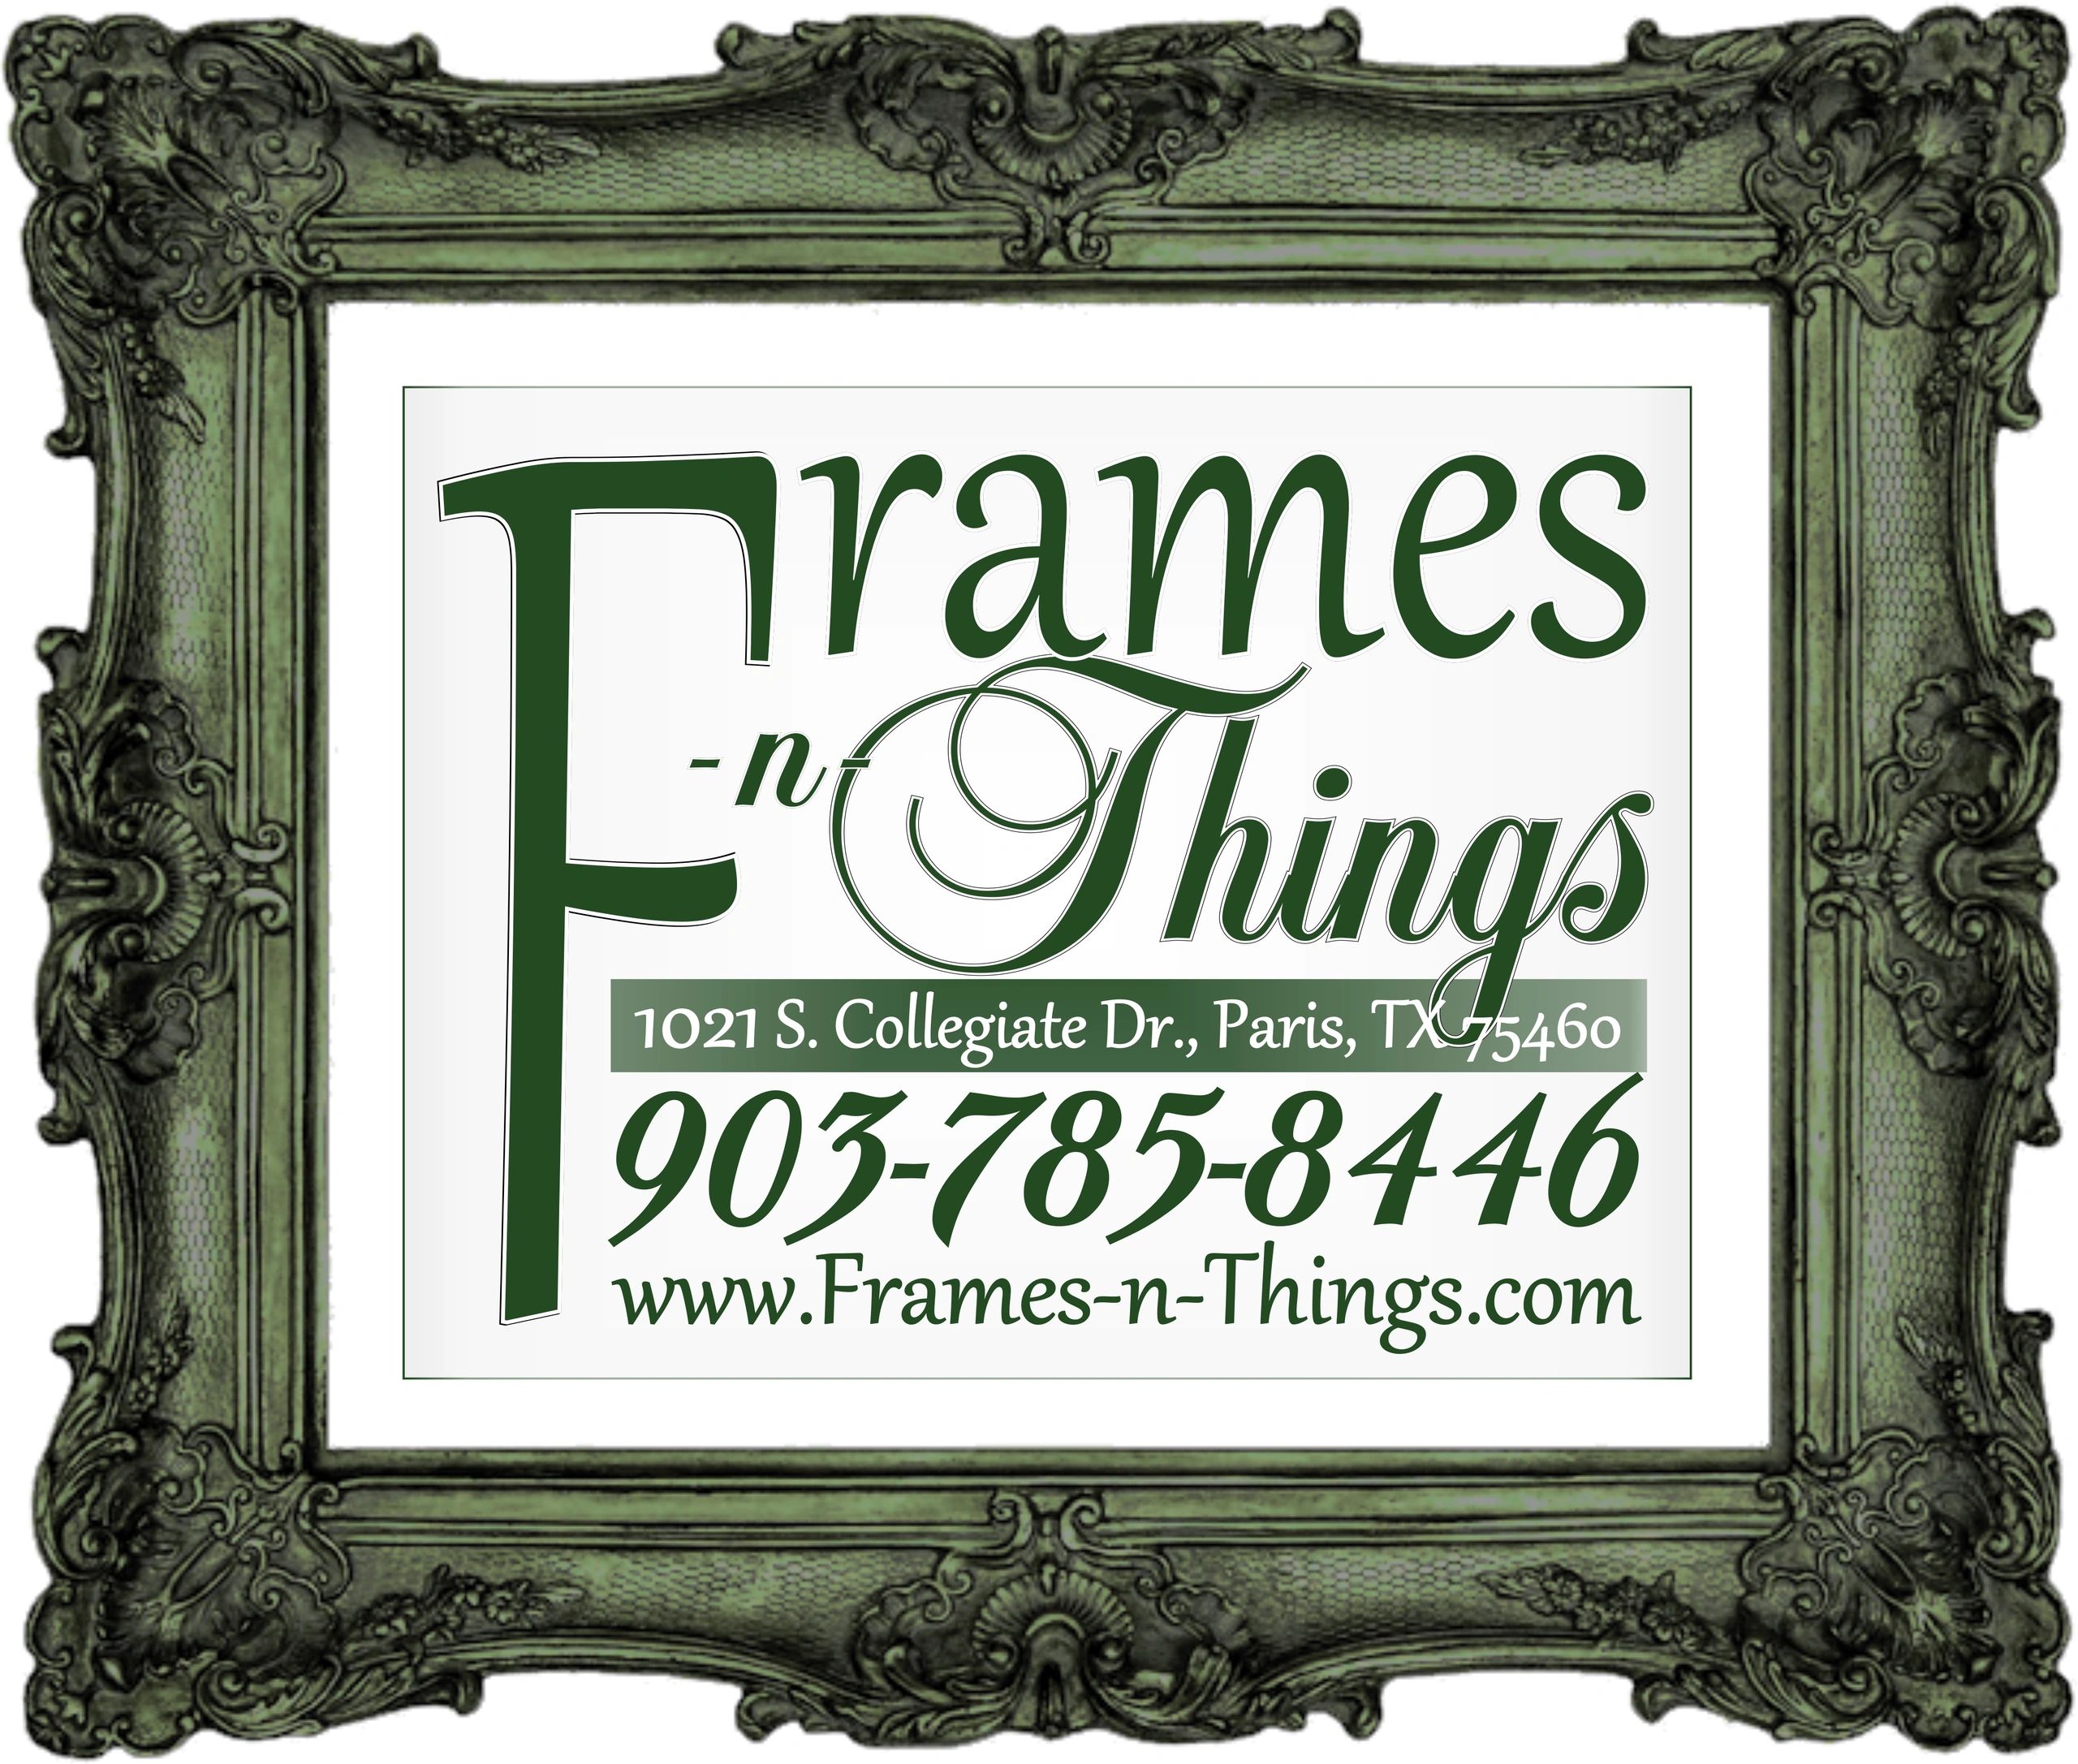 (c) Frames-n-things.com